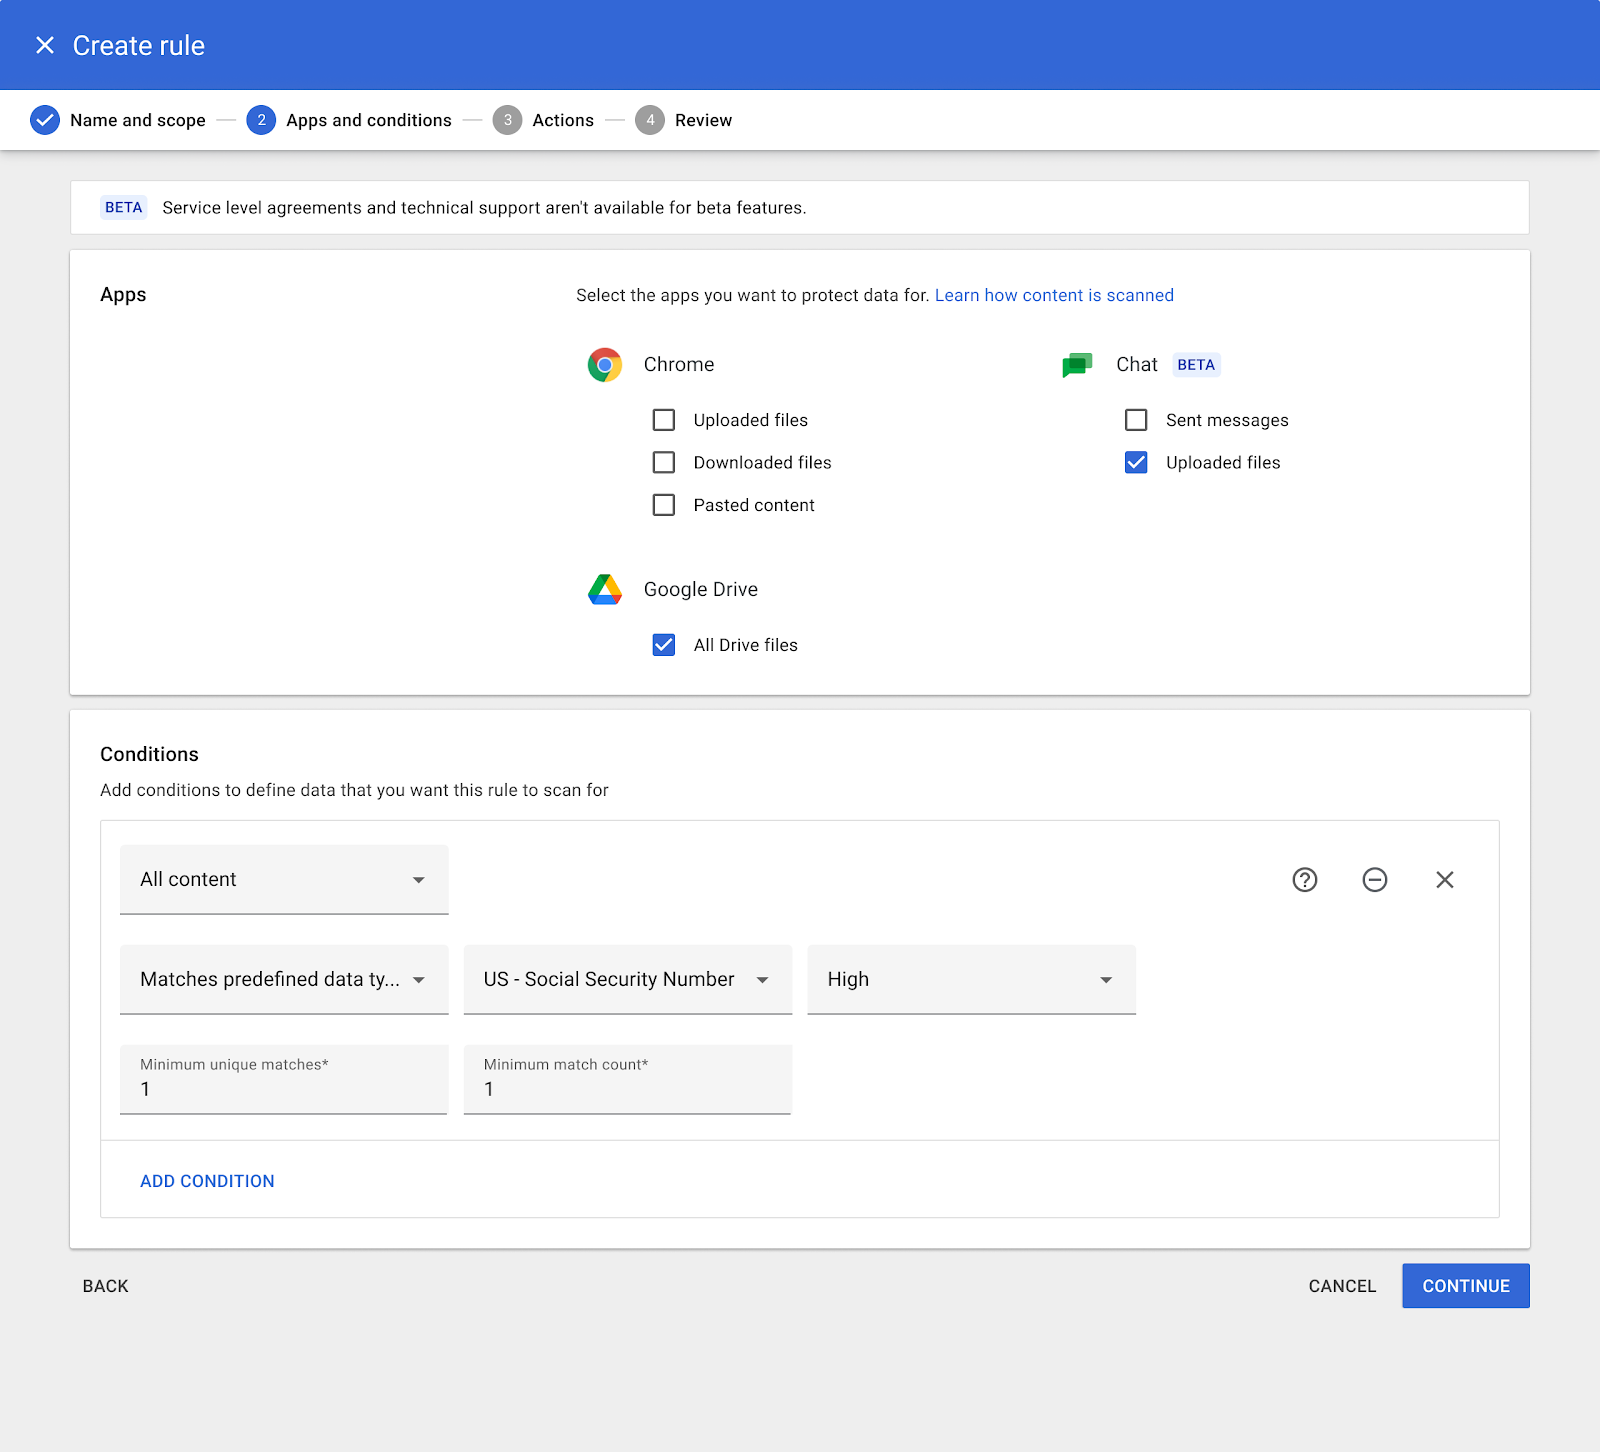 Google Workspace Updates PT: Está disponível a nova versão Beta